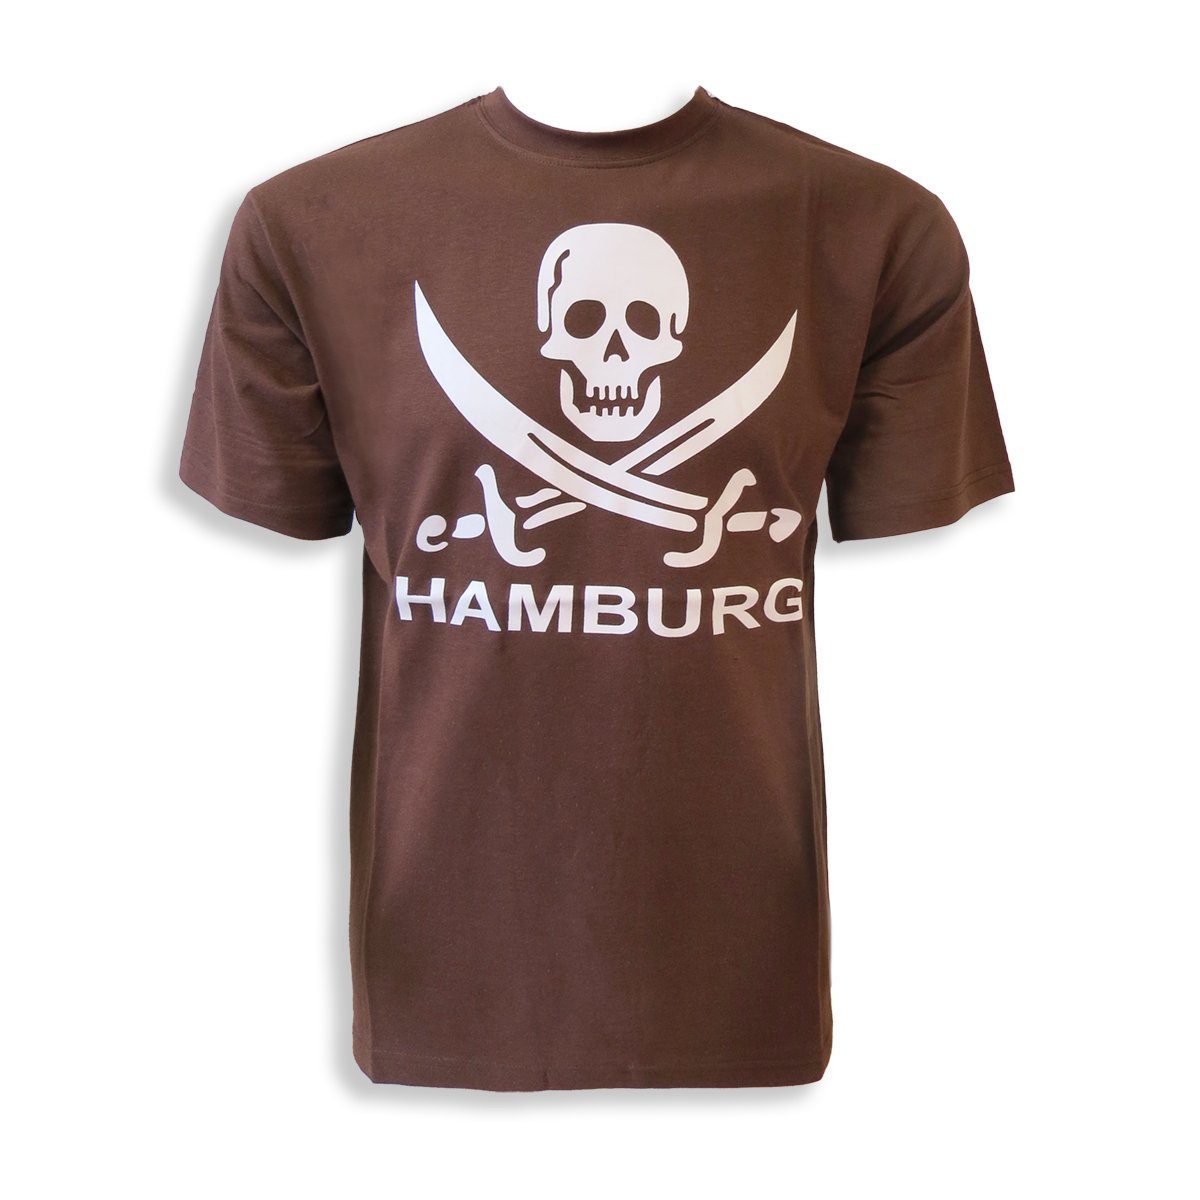 Schwert Sonia Originelli Skull "Totenkopf Hamburg" schwarz-weiß T-Shirt T-Shirt